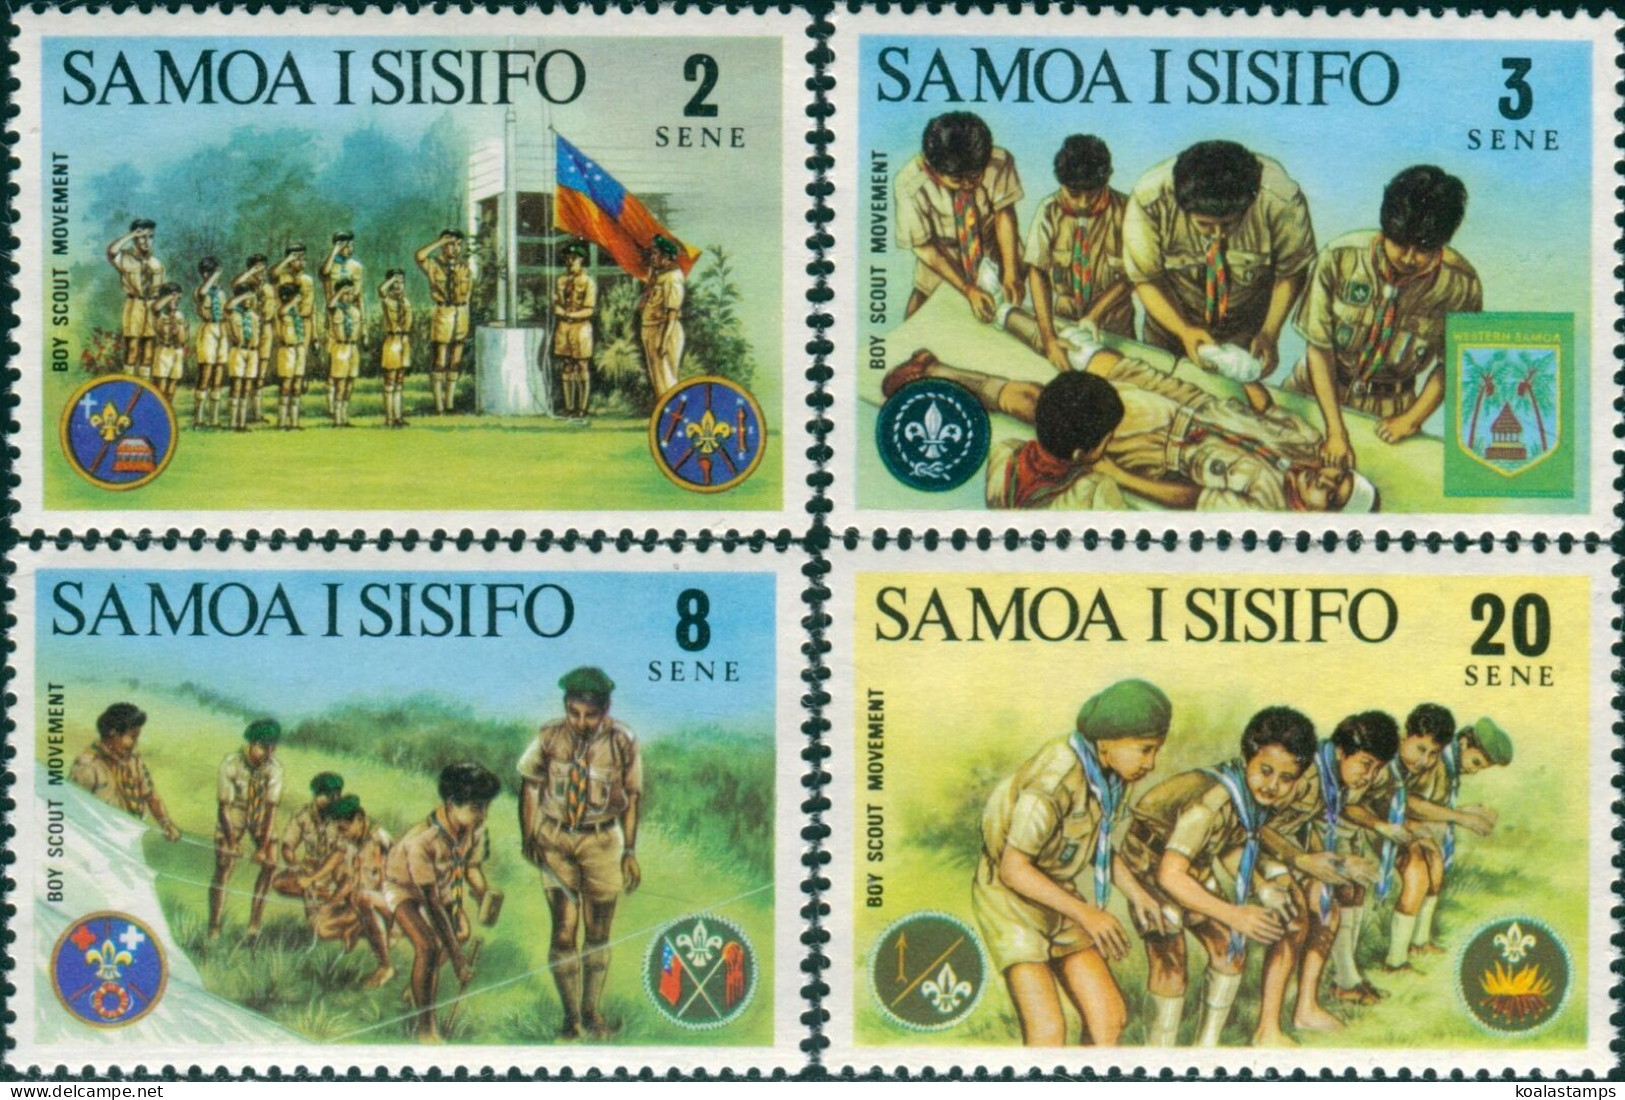 Samoa 1973 SG405-408 Scouts Set MNH - Samoa